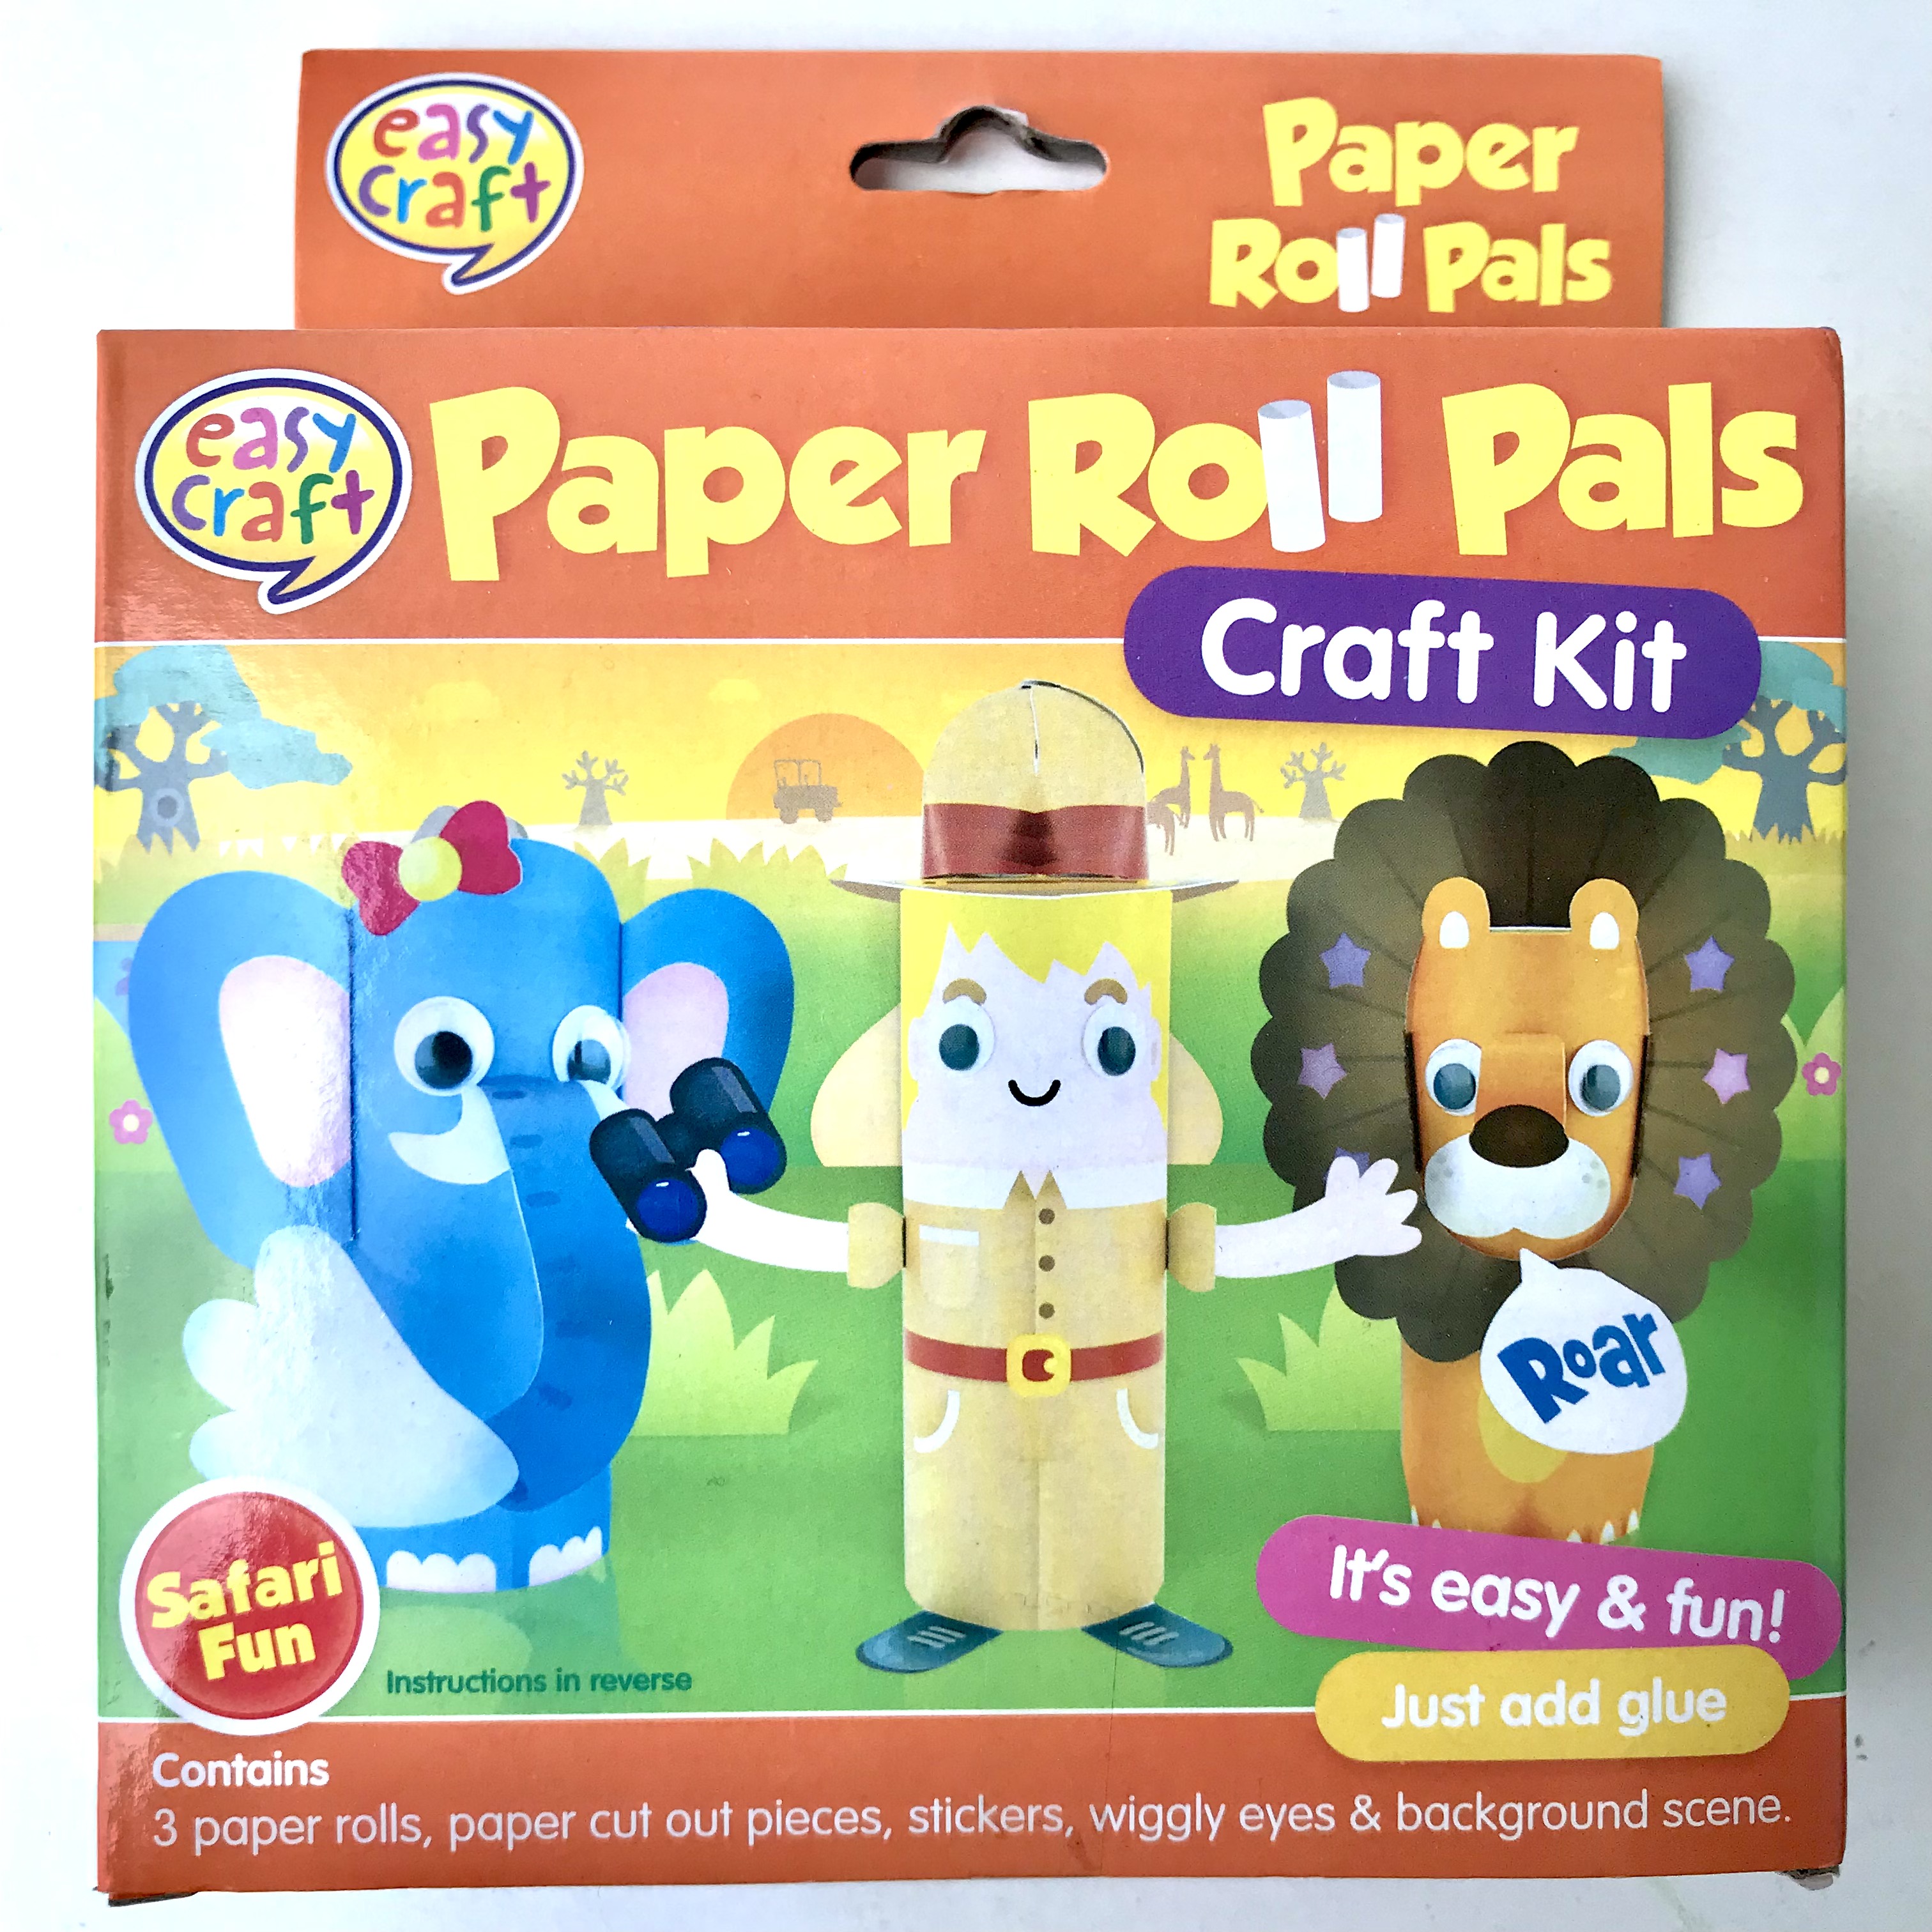 Paper Craft Kids ราคาถูก ซื้อออนไลน์ที่ - ก.ย. 2022 | Lazada.co.th